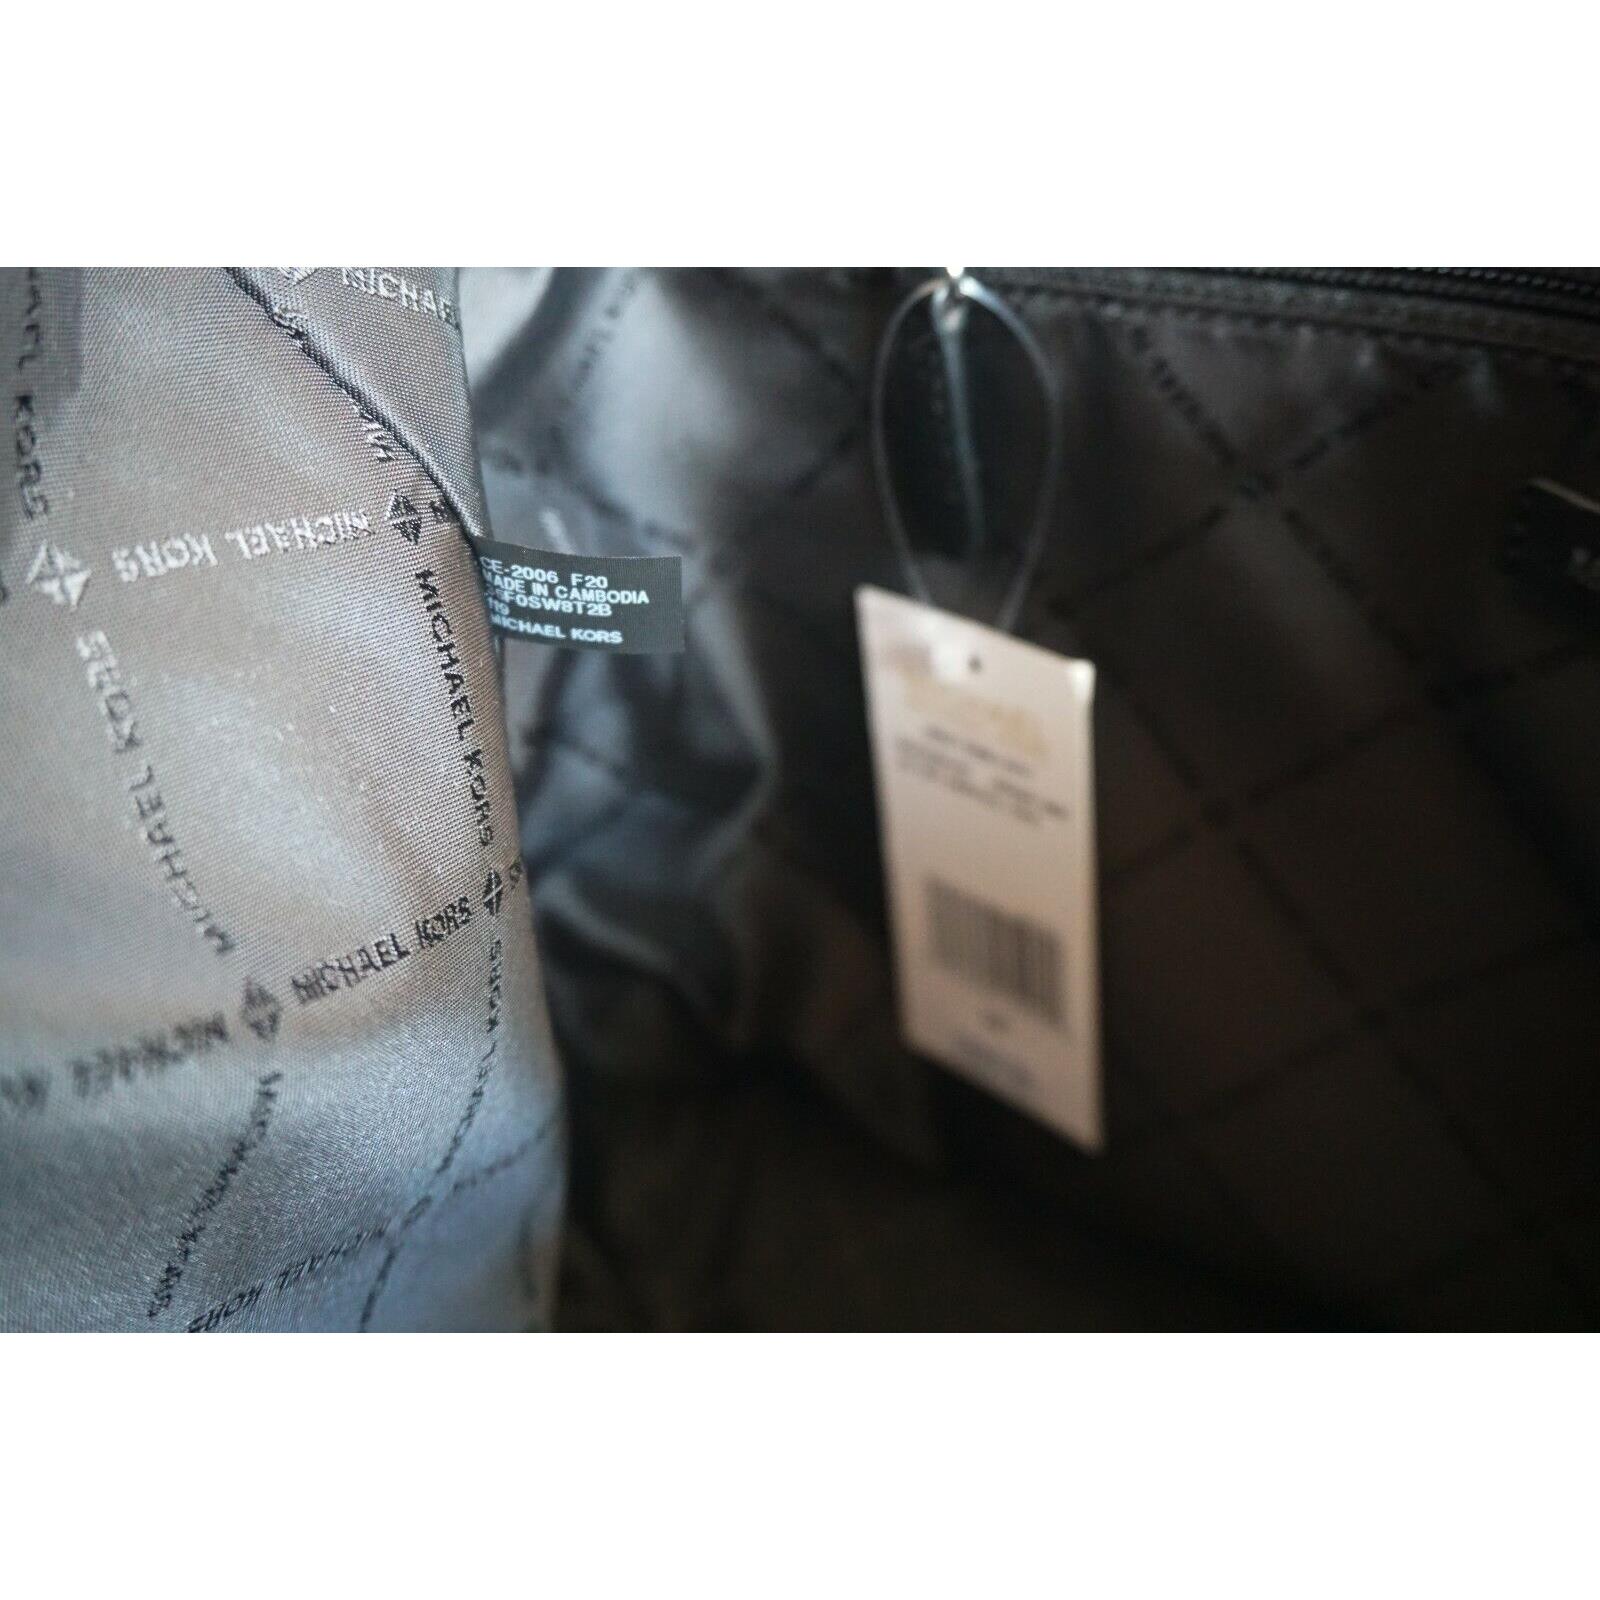 Michael Kors  bag  JET SET TRAVEL - White Black Exterior, Black Lining, Black Handle/Strap 8